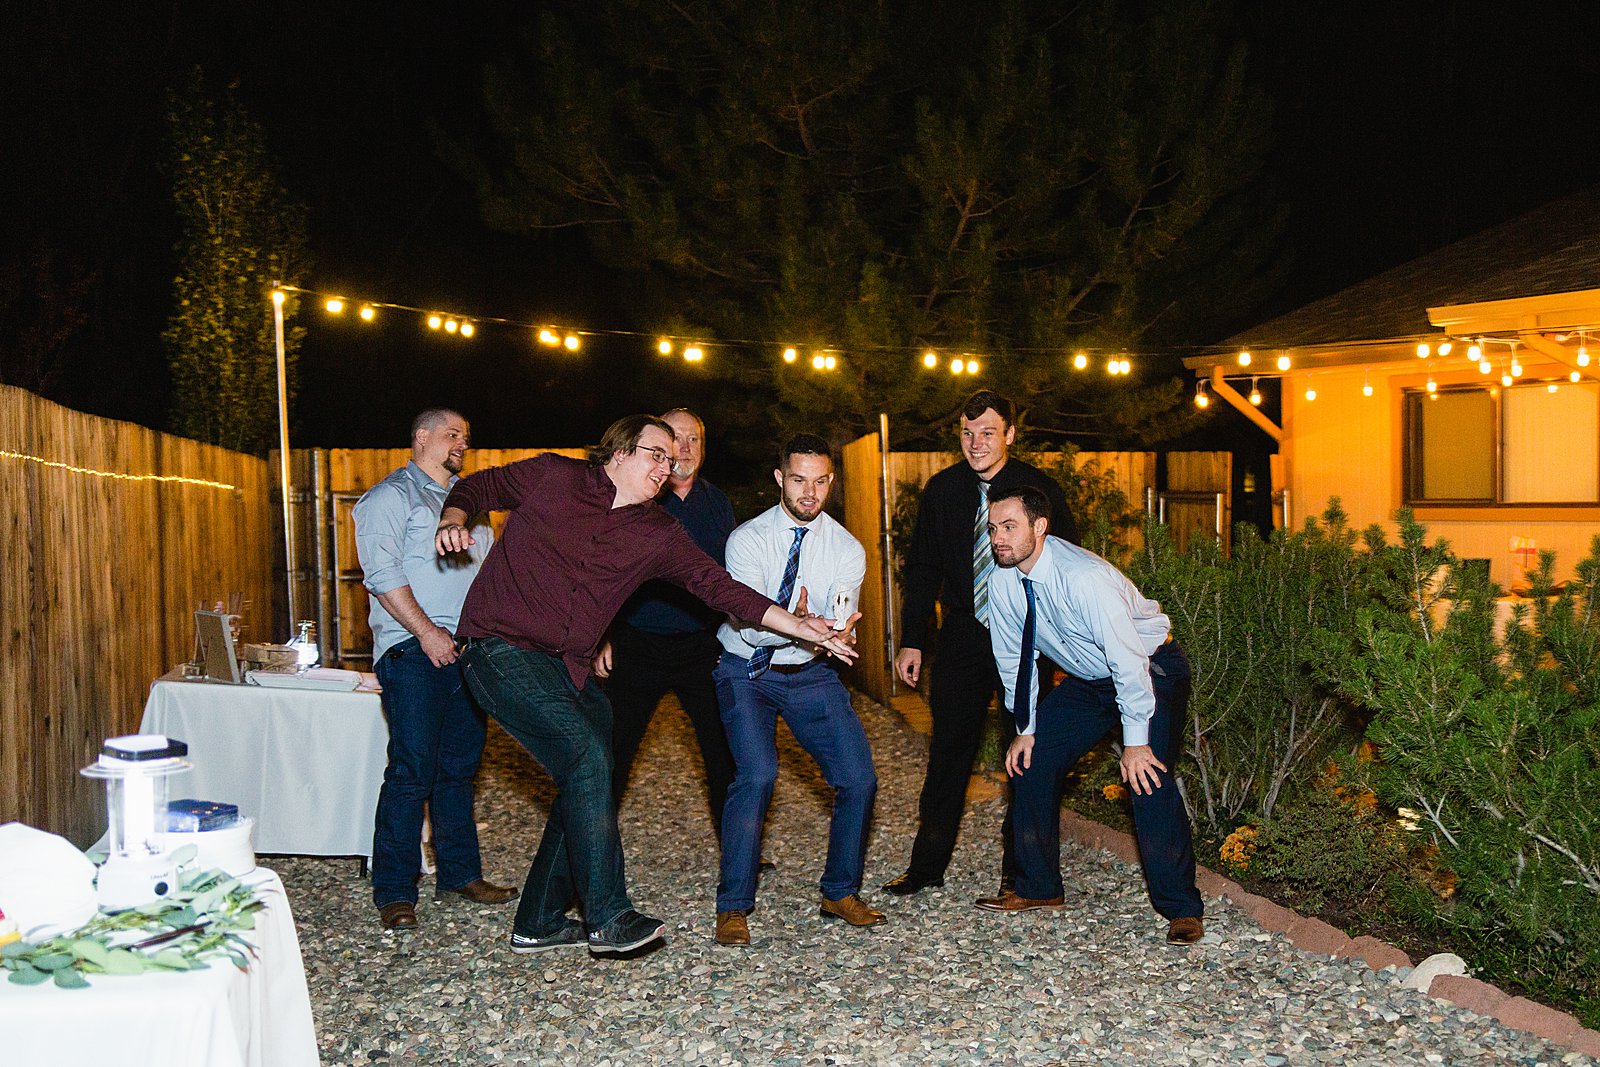 Garter toss at backyard wedding reception by Flagstaff wedding photographer PMA Photography.